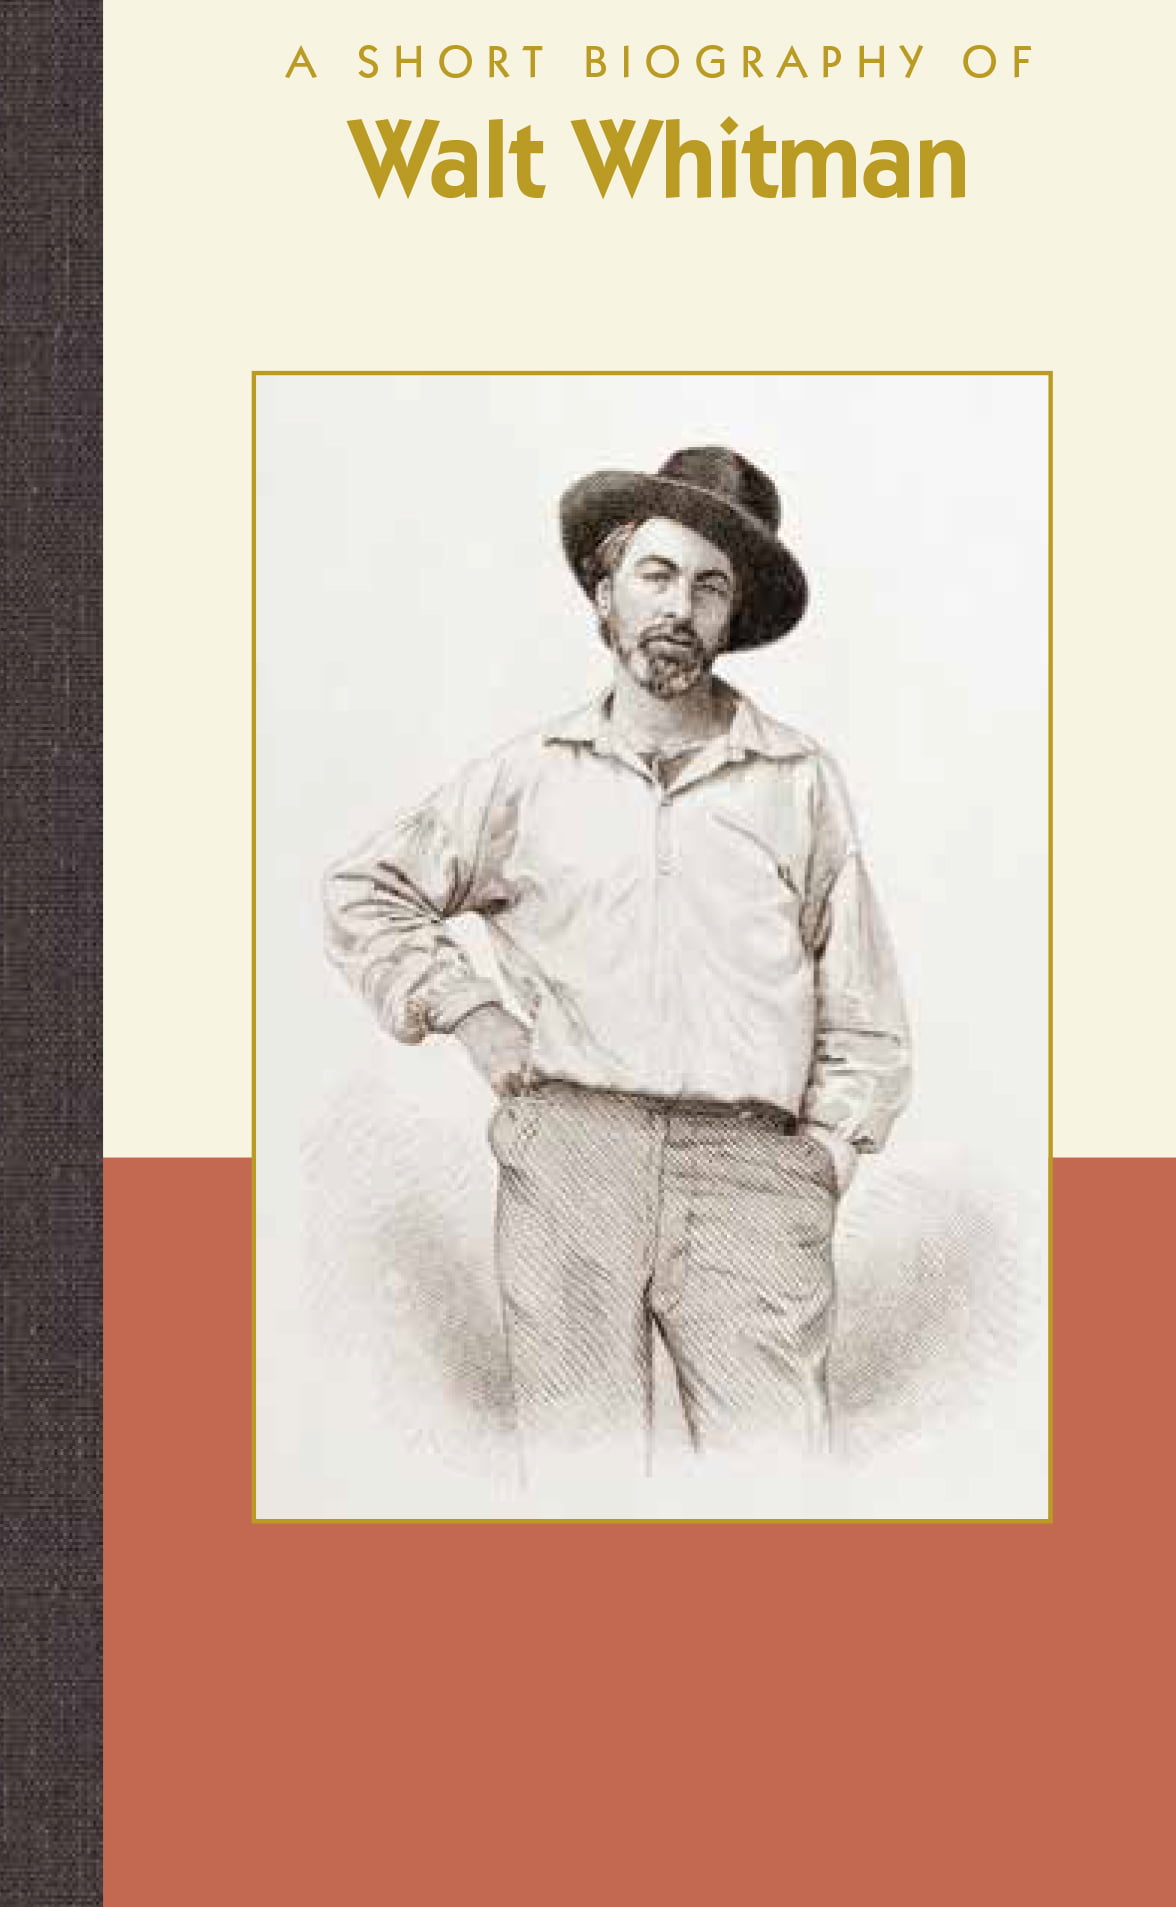 biography of walt whitman in short